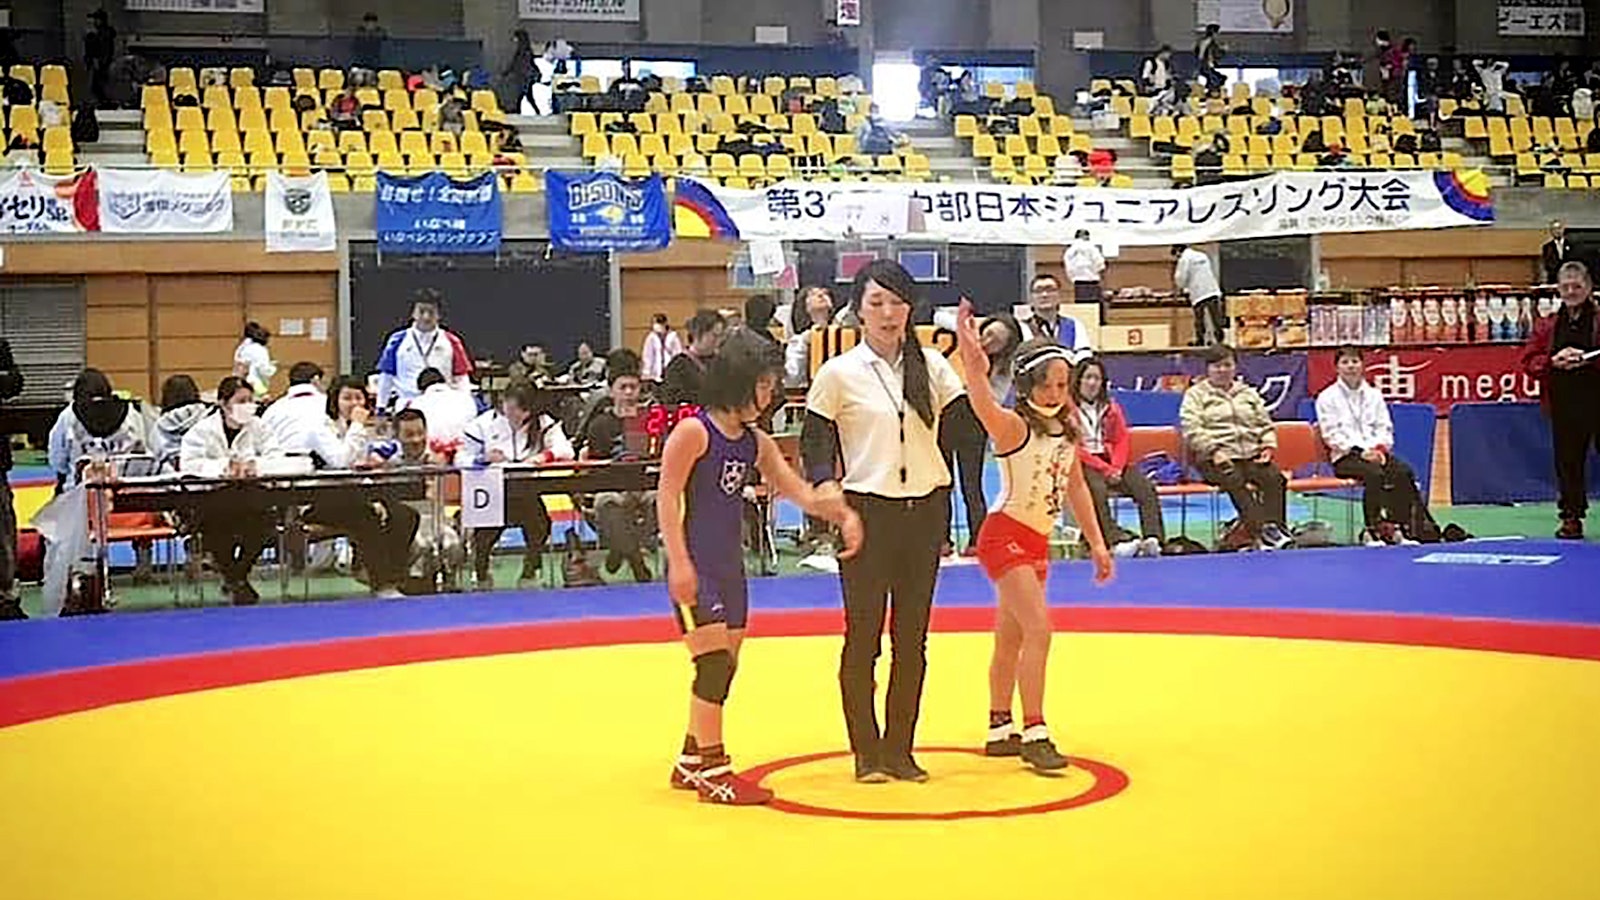 Tai McBride wins a match wrestling in Japan.